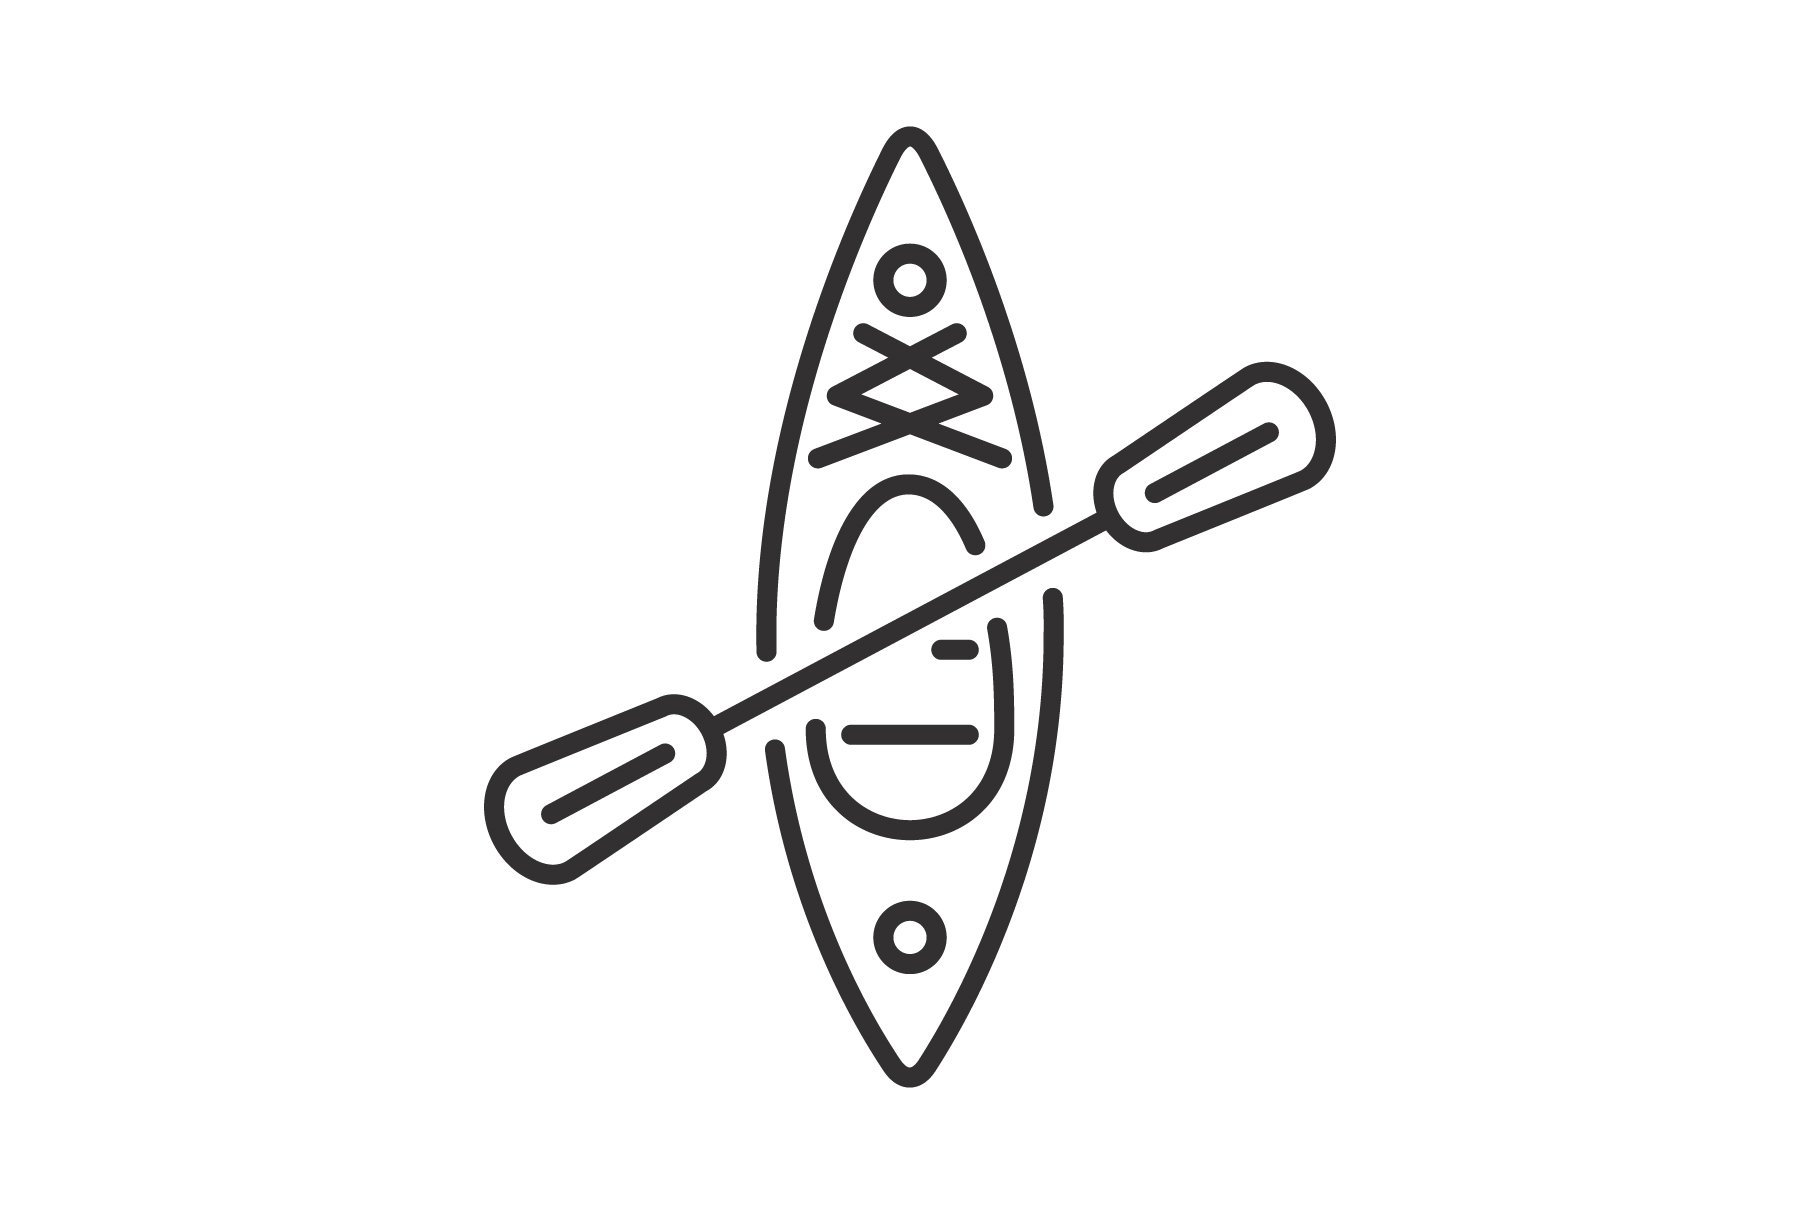 canoe with paddle icon, kayak cover image.